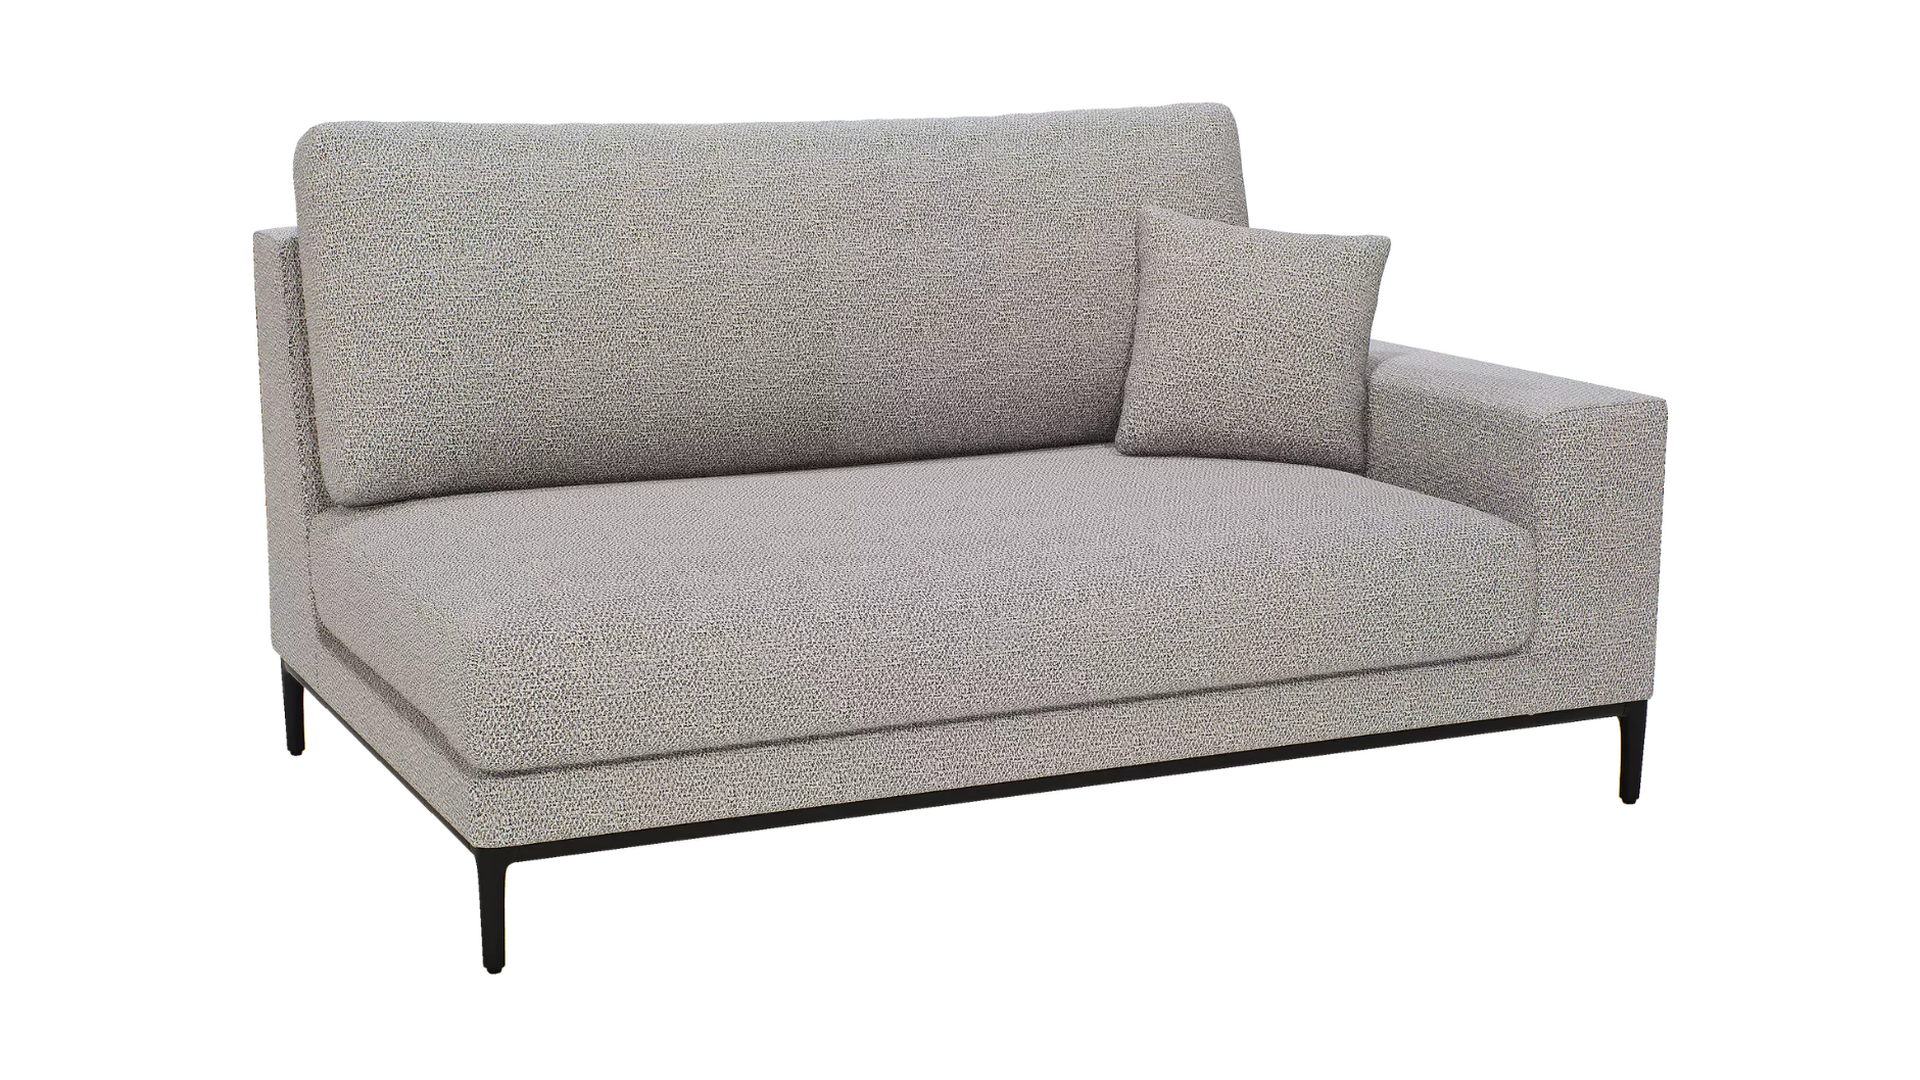 Manutti Zendo Sense left seat modulaire outdoor sofa bank HORA Barneveld 2.png